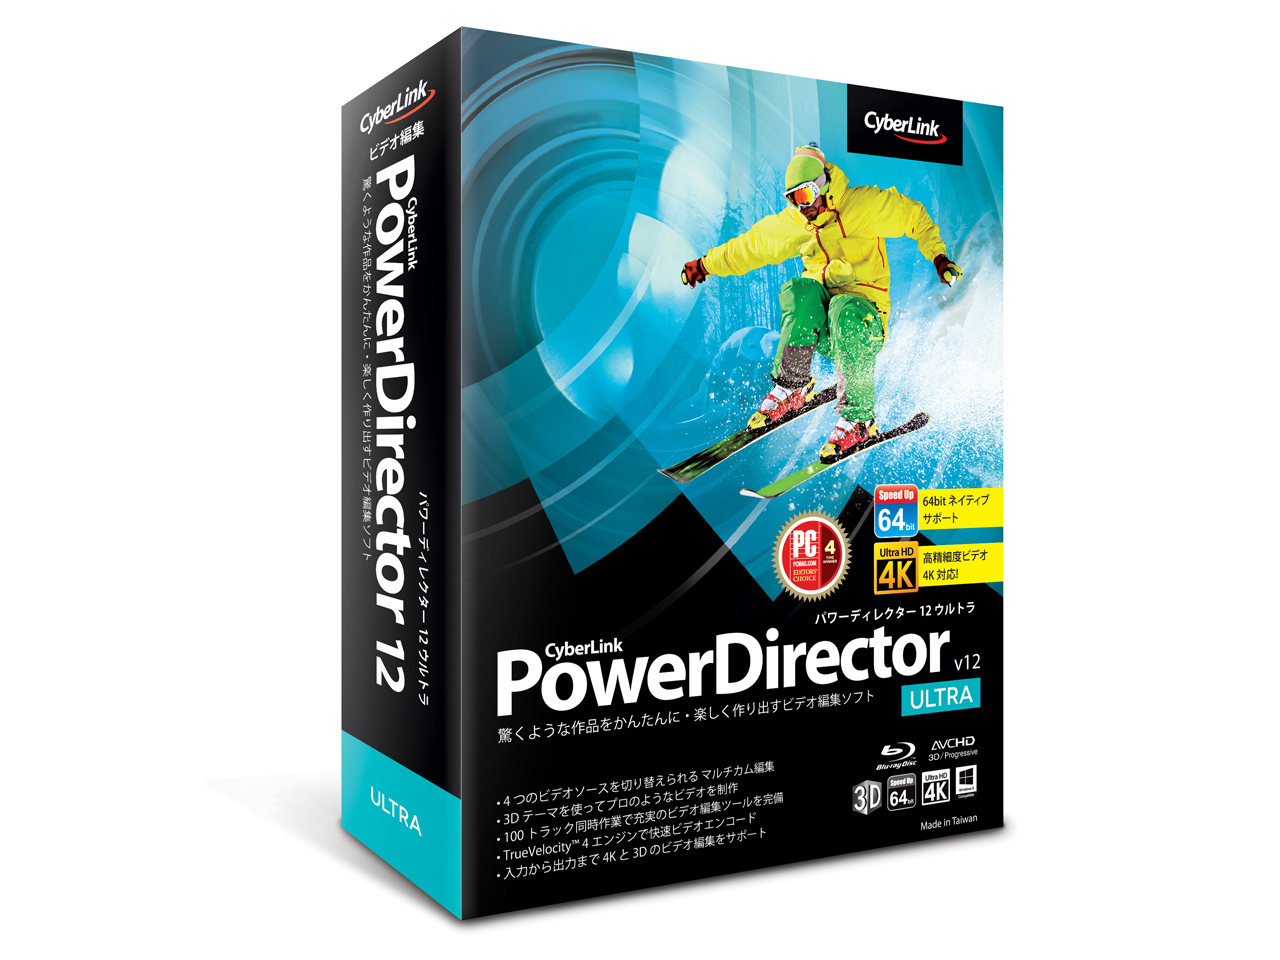 PowerDirector12 Ultra の製品画像